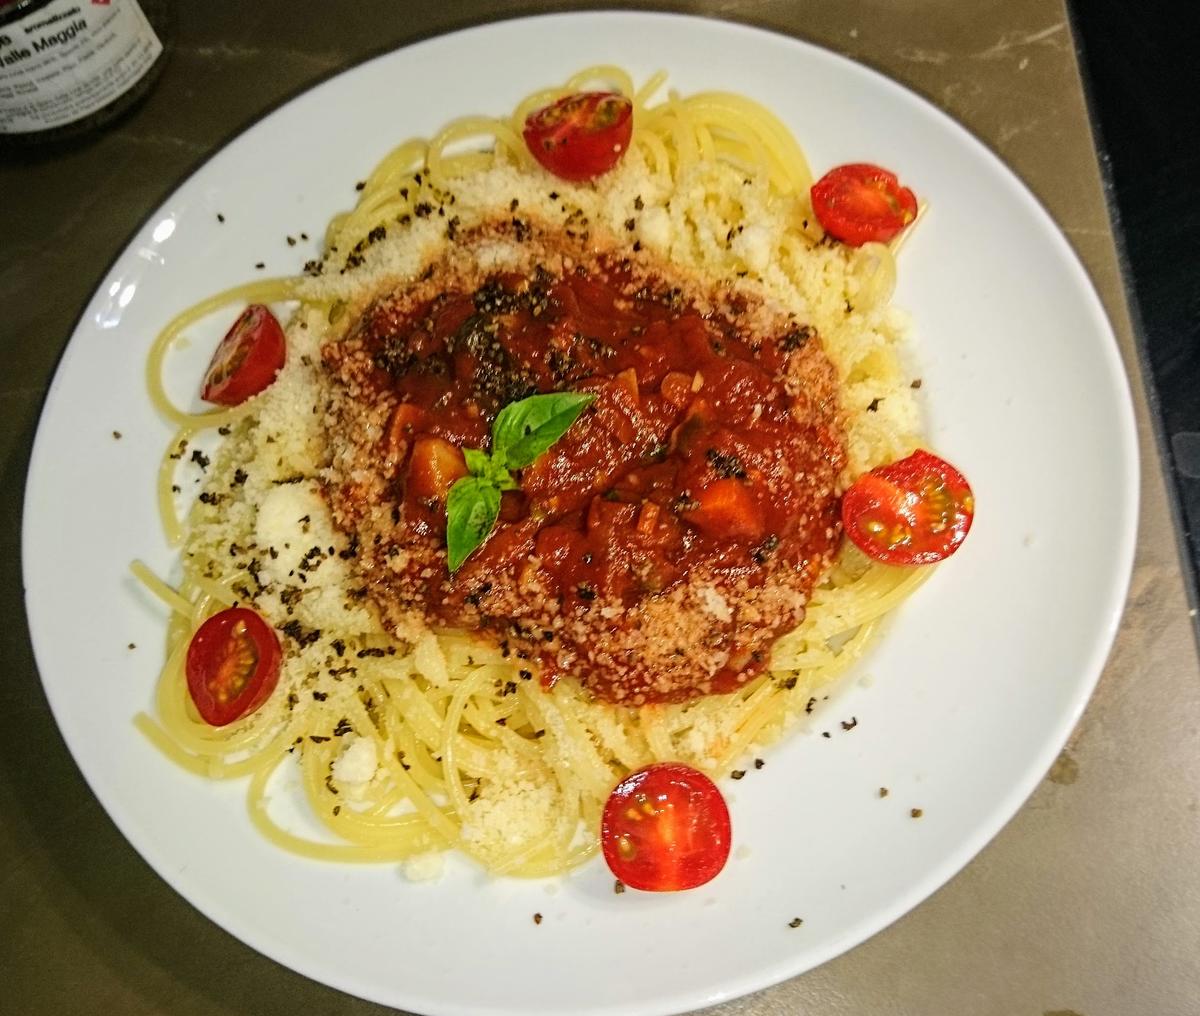 Spaghetti all' amatriciana - Rezept - Bild Nr. 2